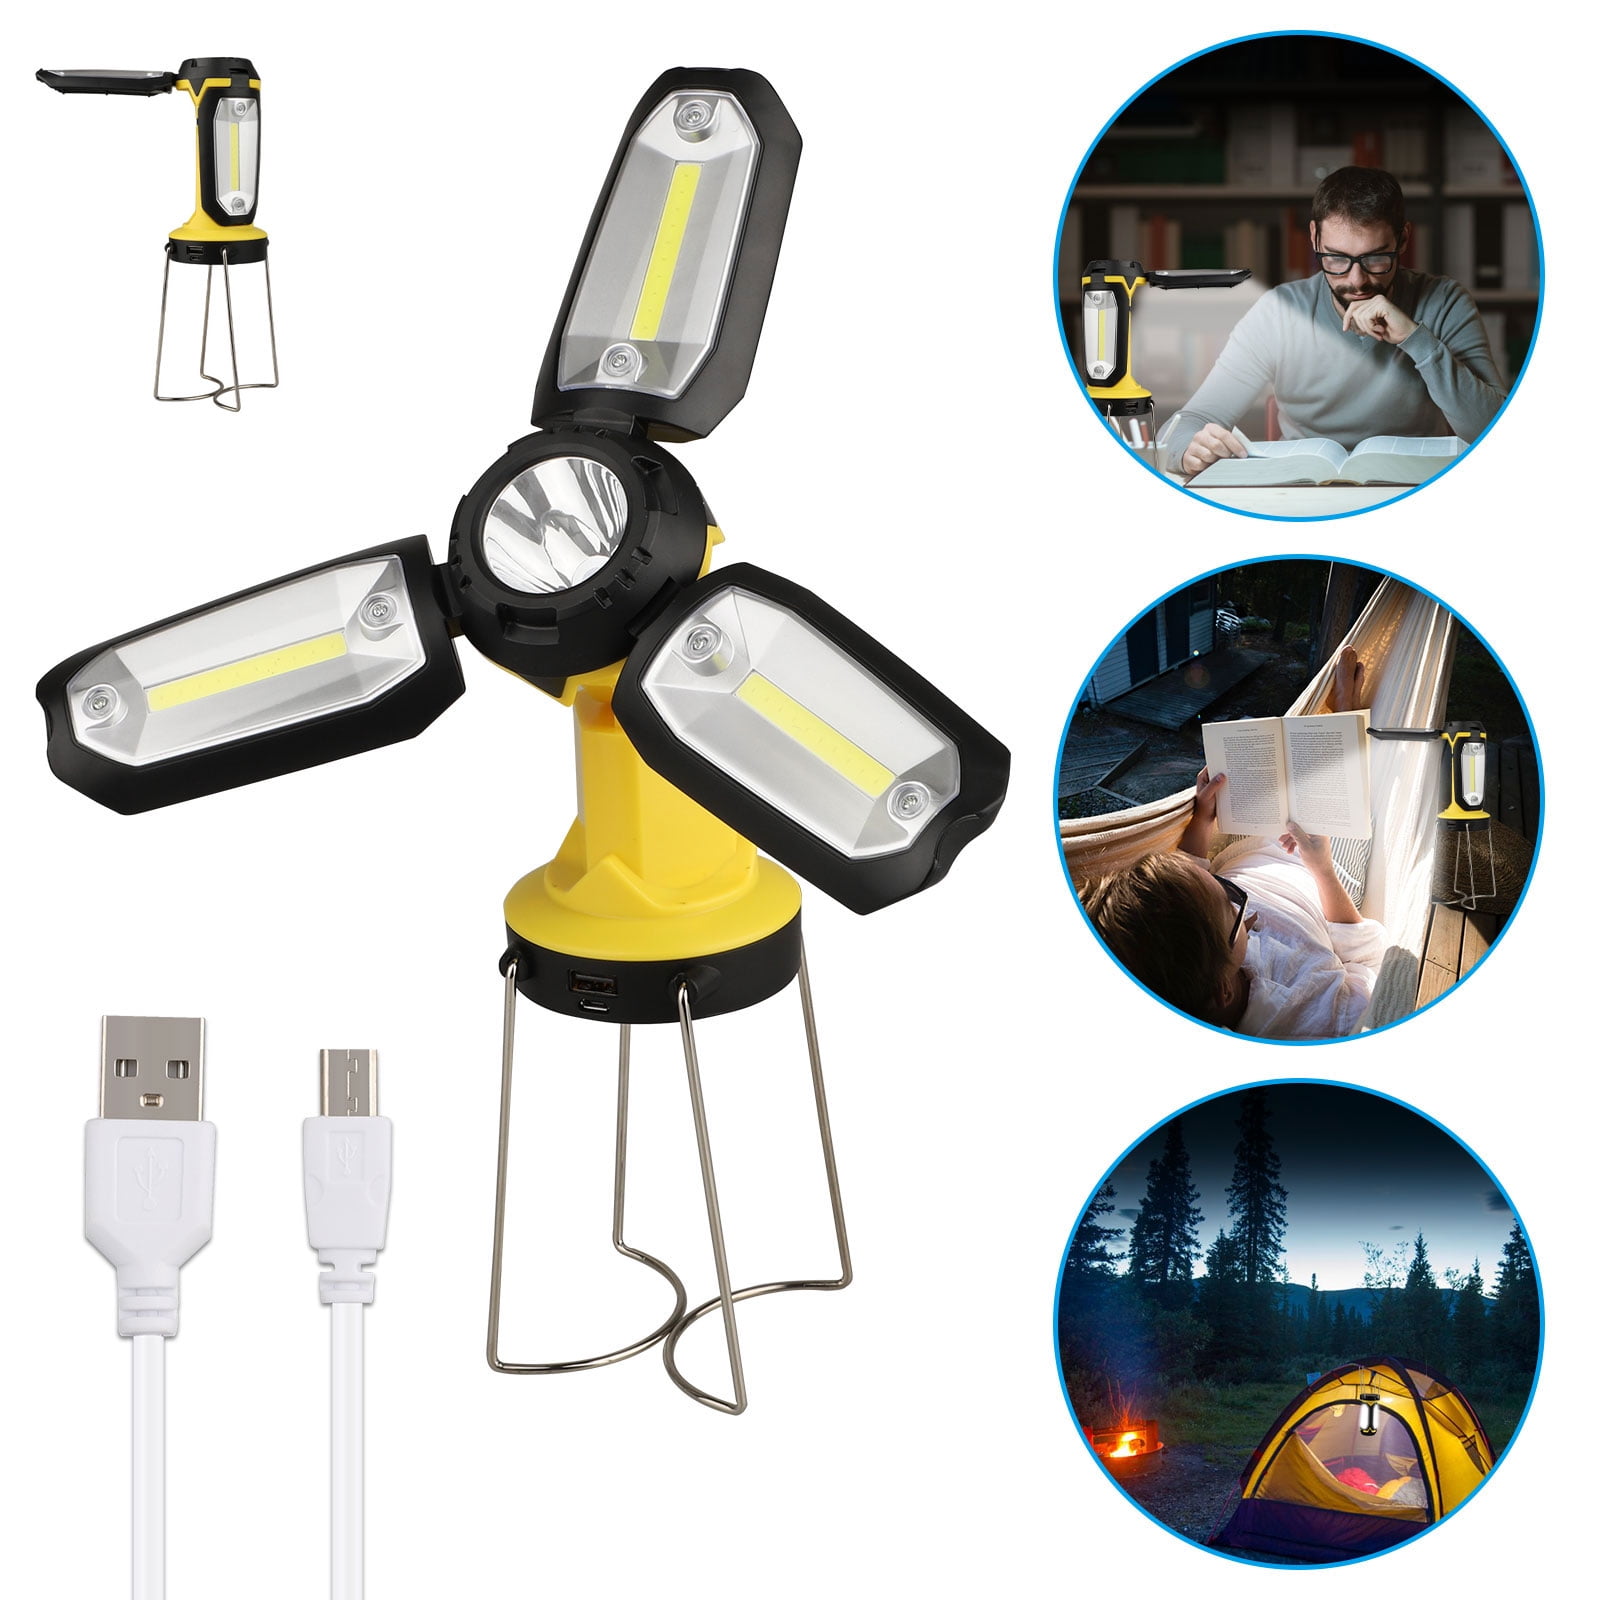 LED Flashlight Worklight Foldable Camping Lantern Portable Tent Emergency Light